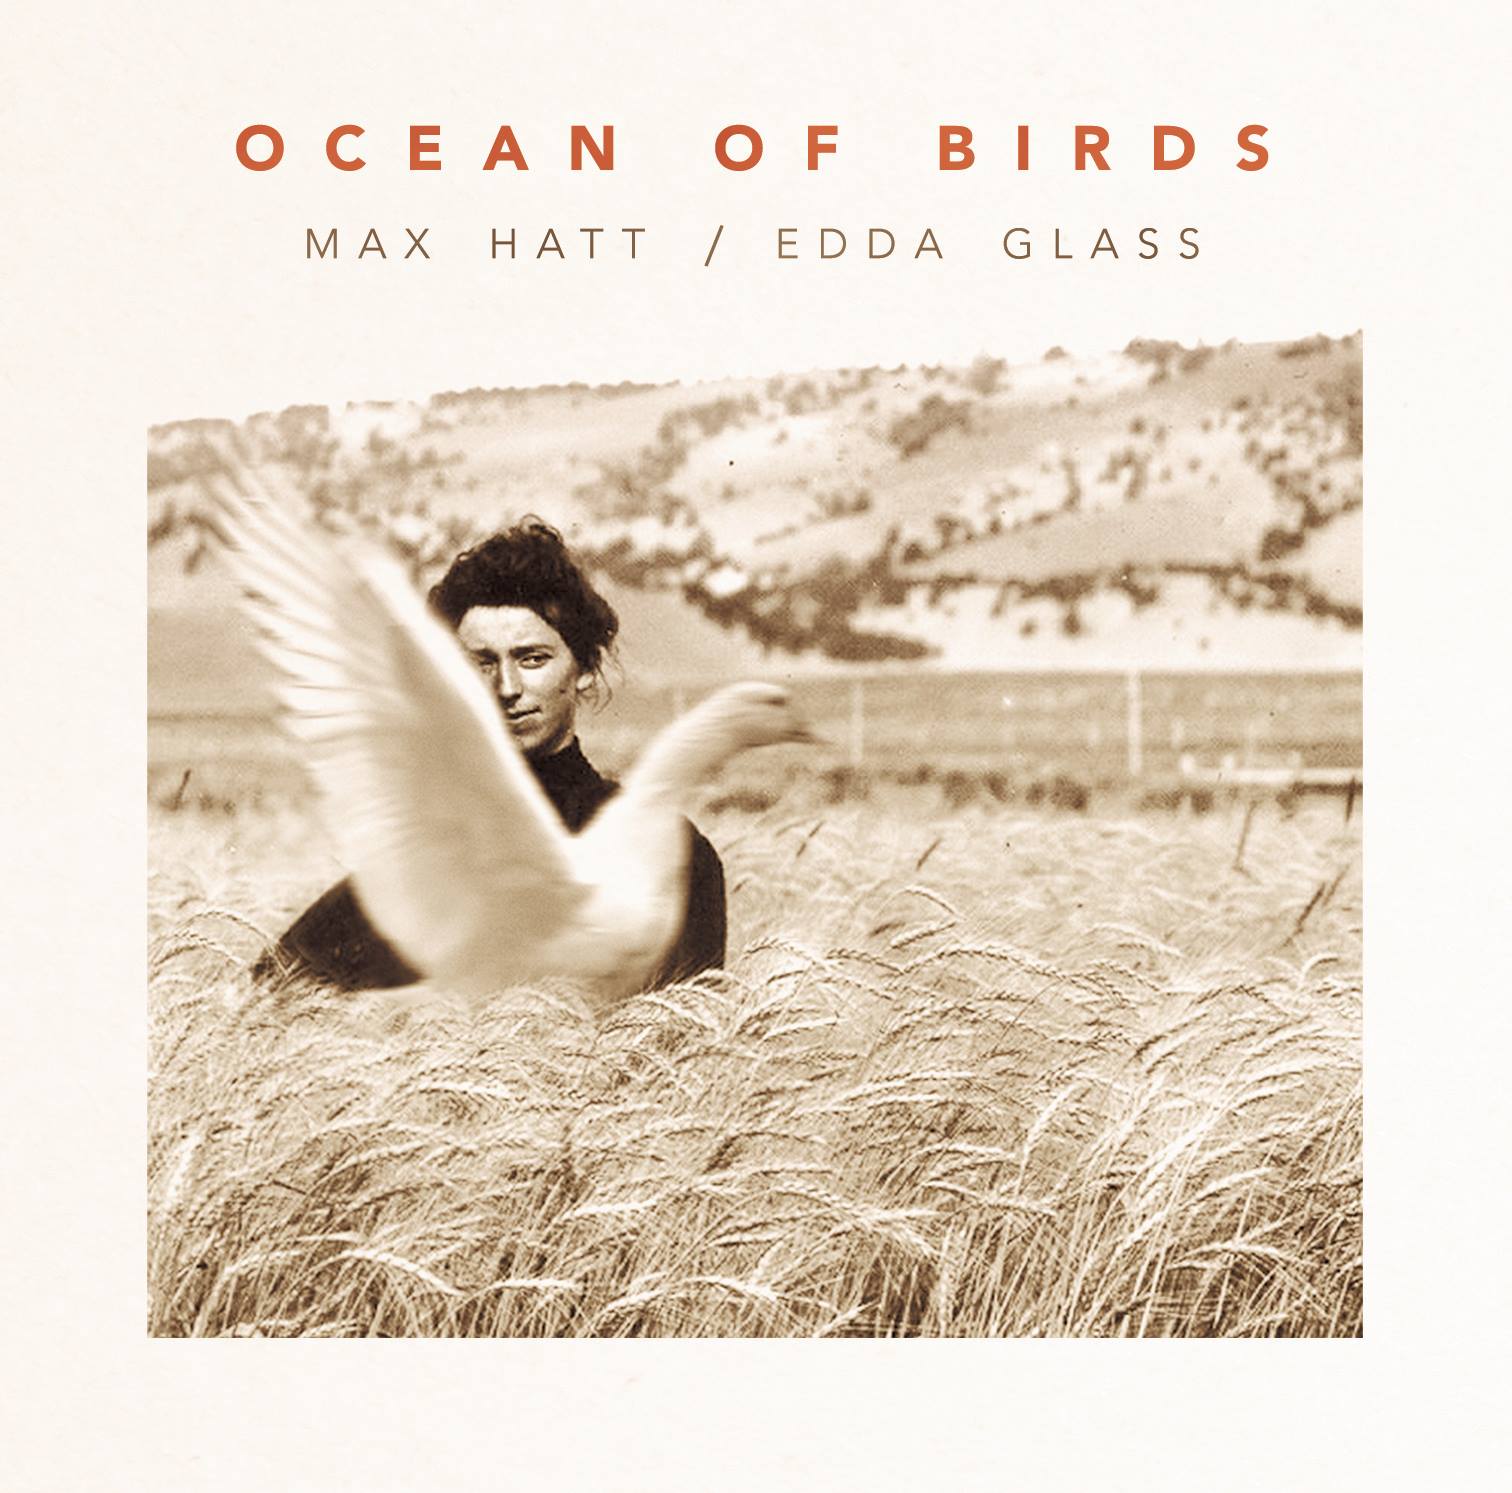 Max Hatt / Edda Glass